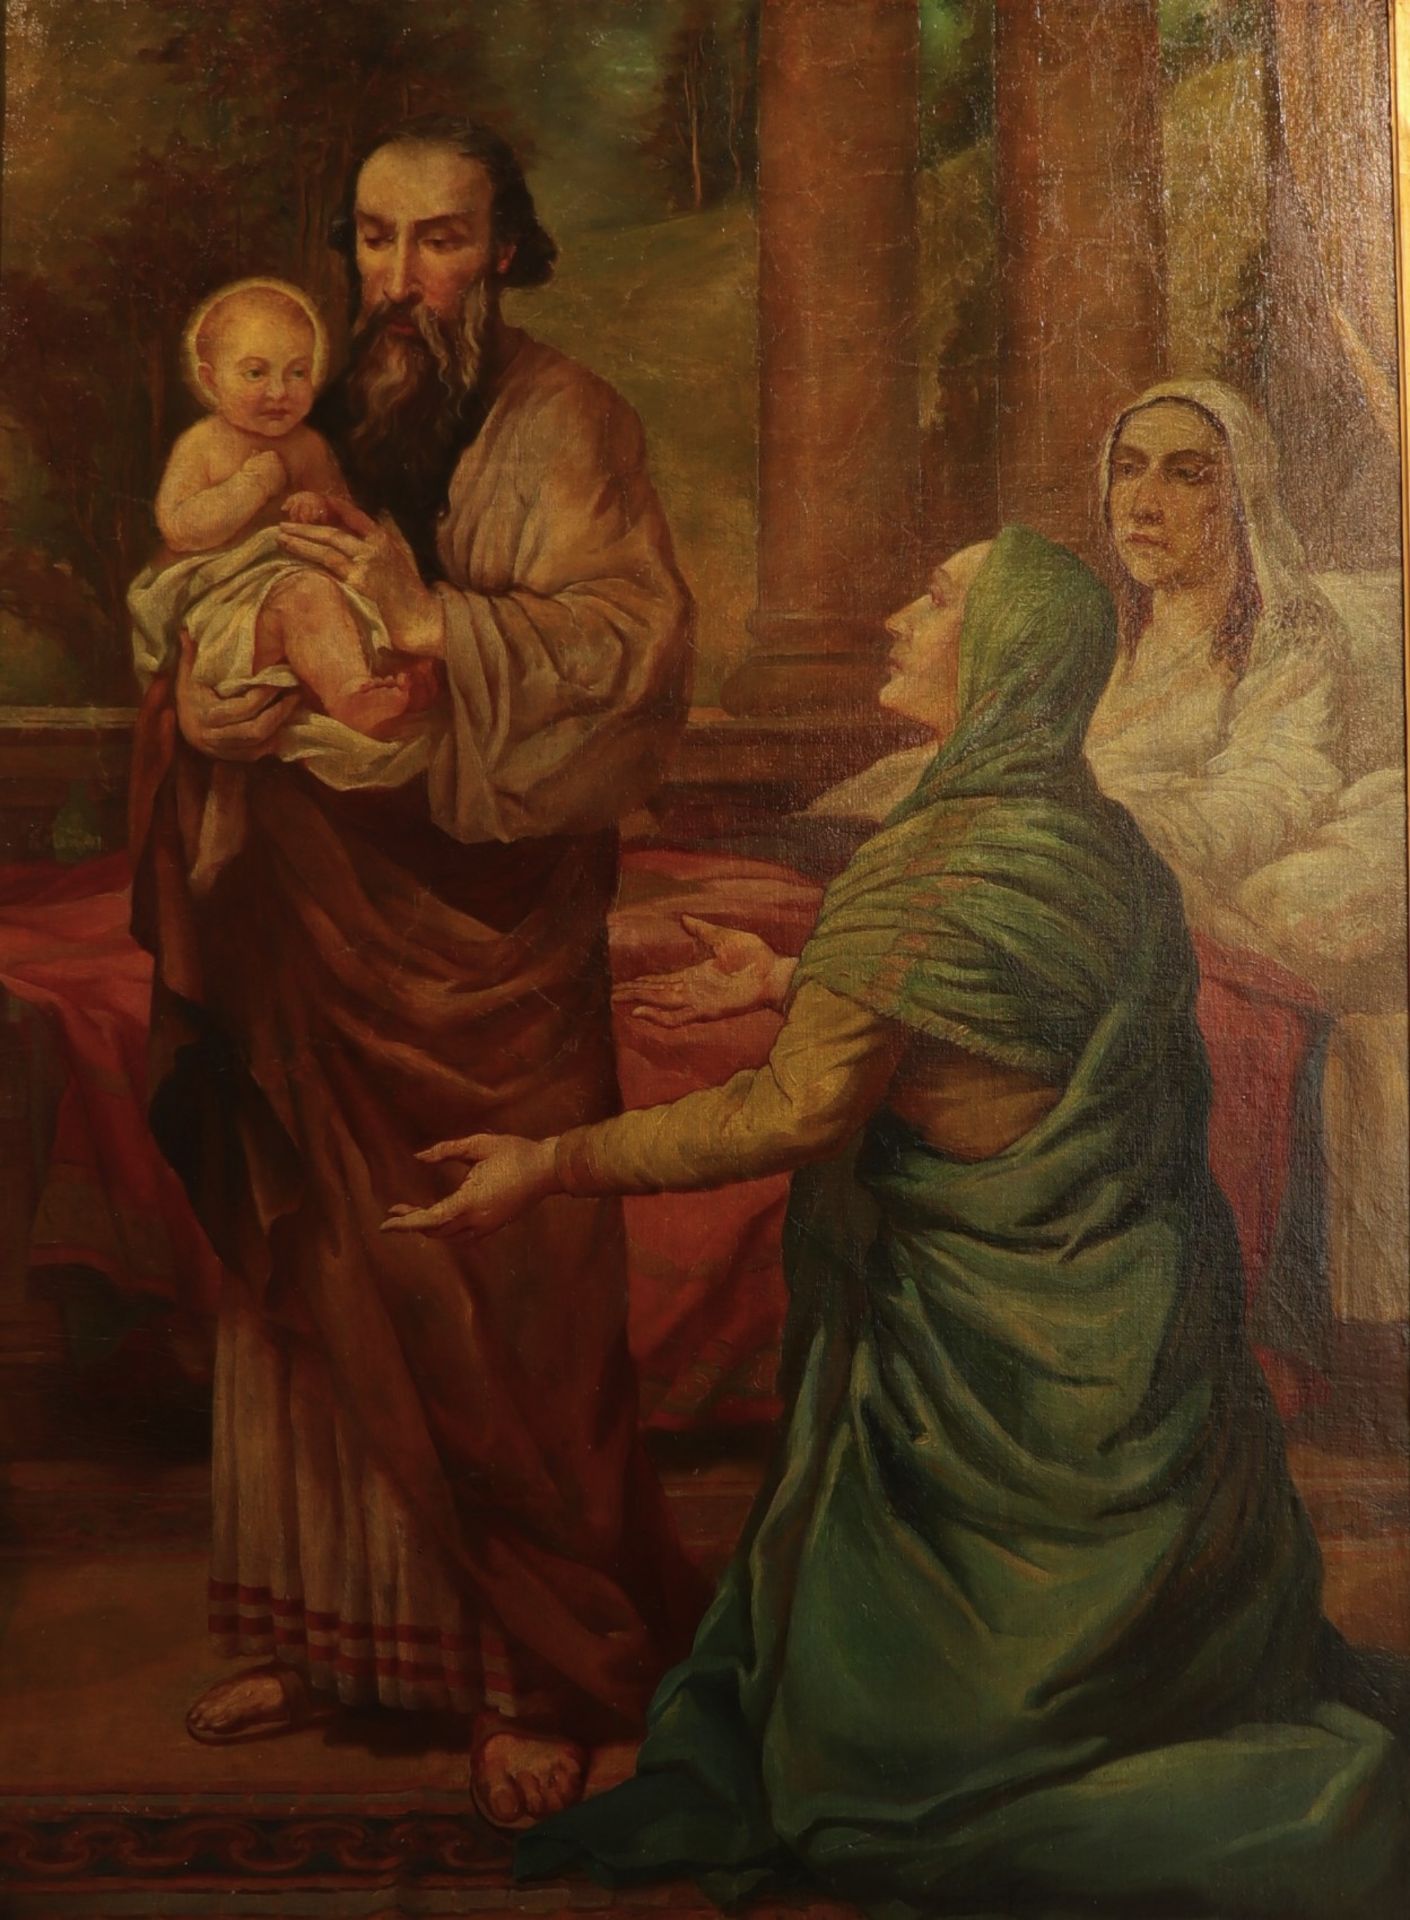 "The Holy Family" - Large religious scene, oil on canvas, 18th century Italian school.